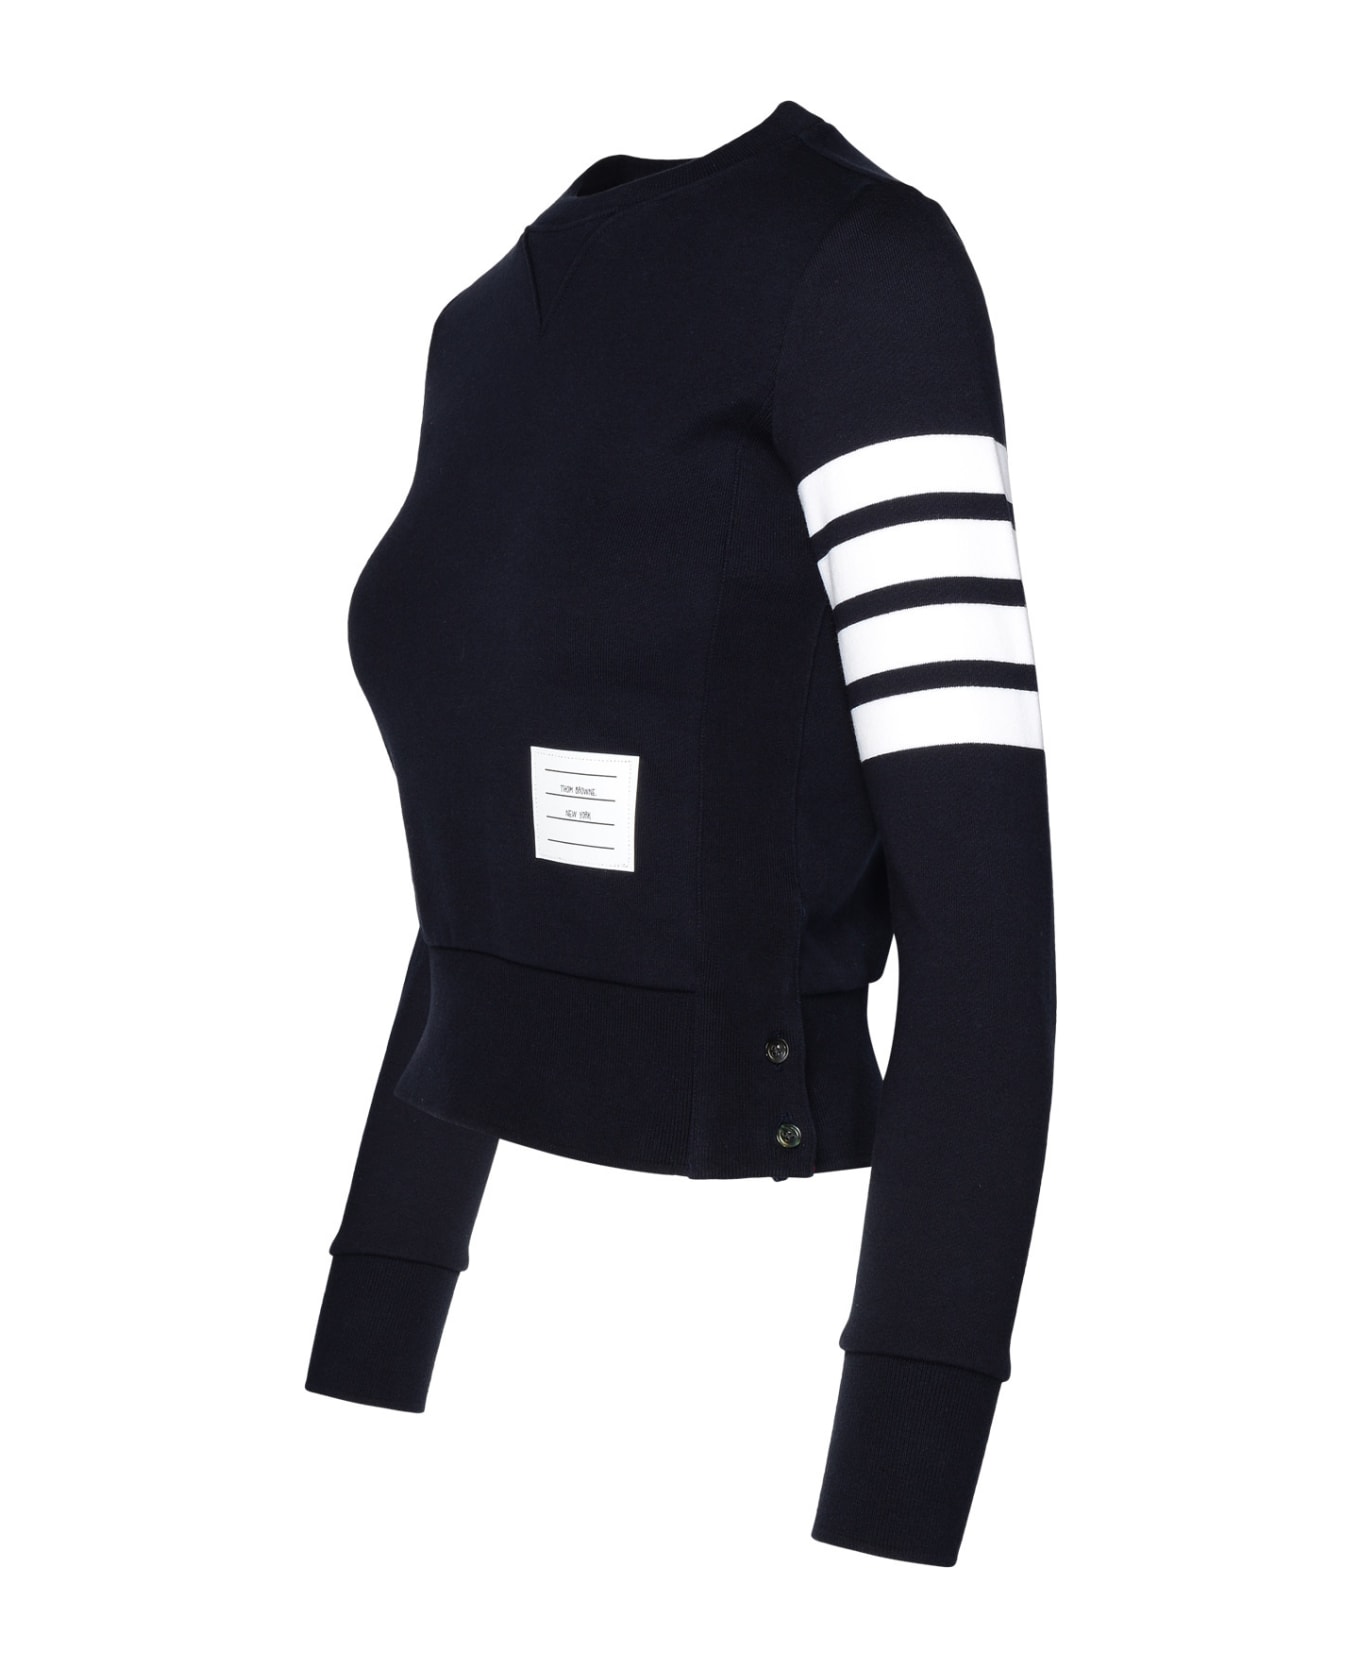 Thom Browne Navy Cotton Sweatshirt - Navy